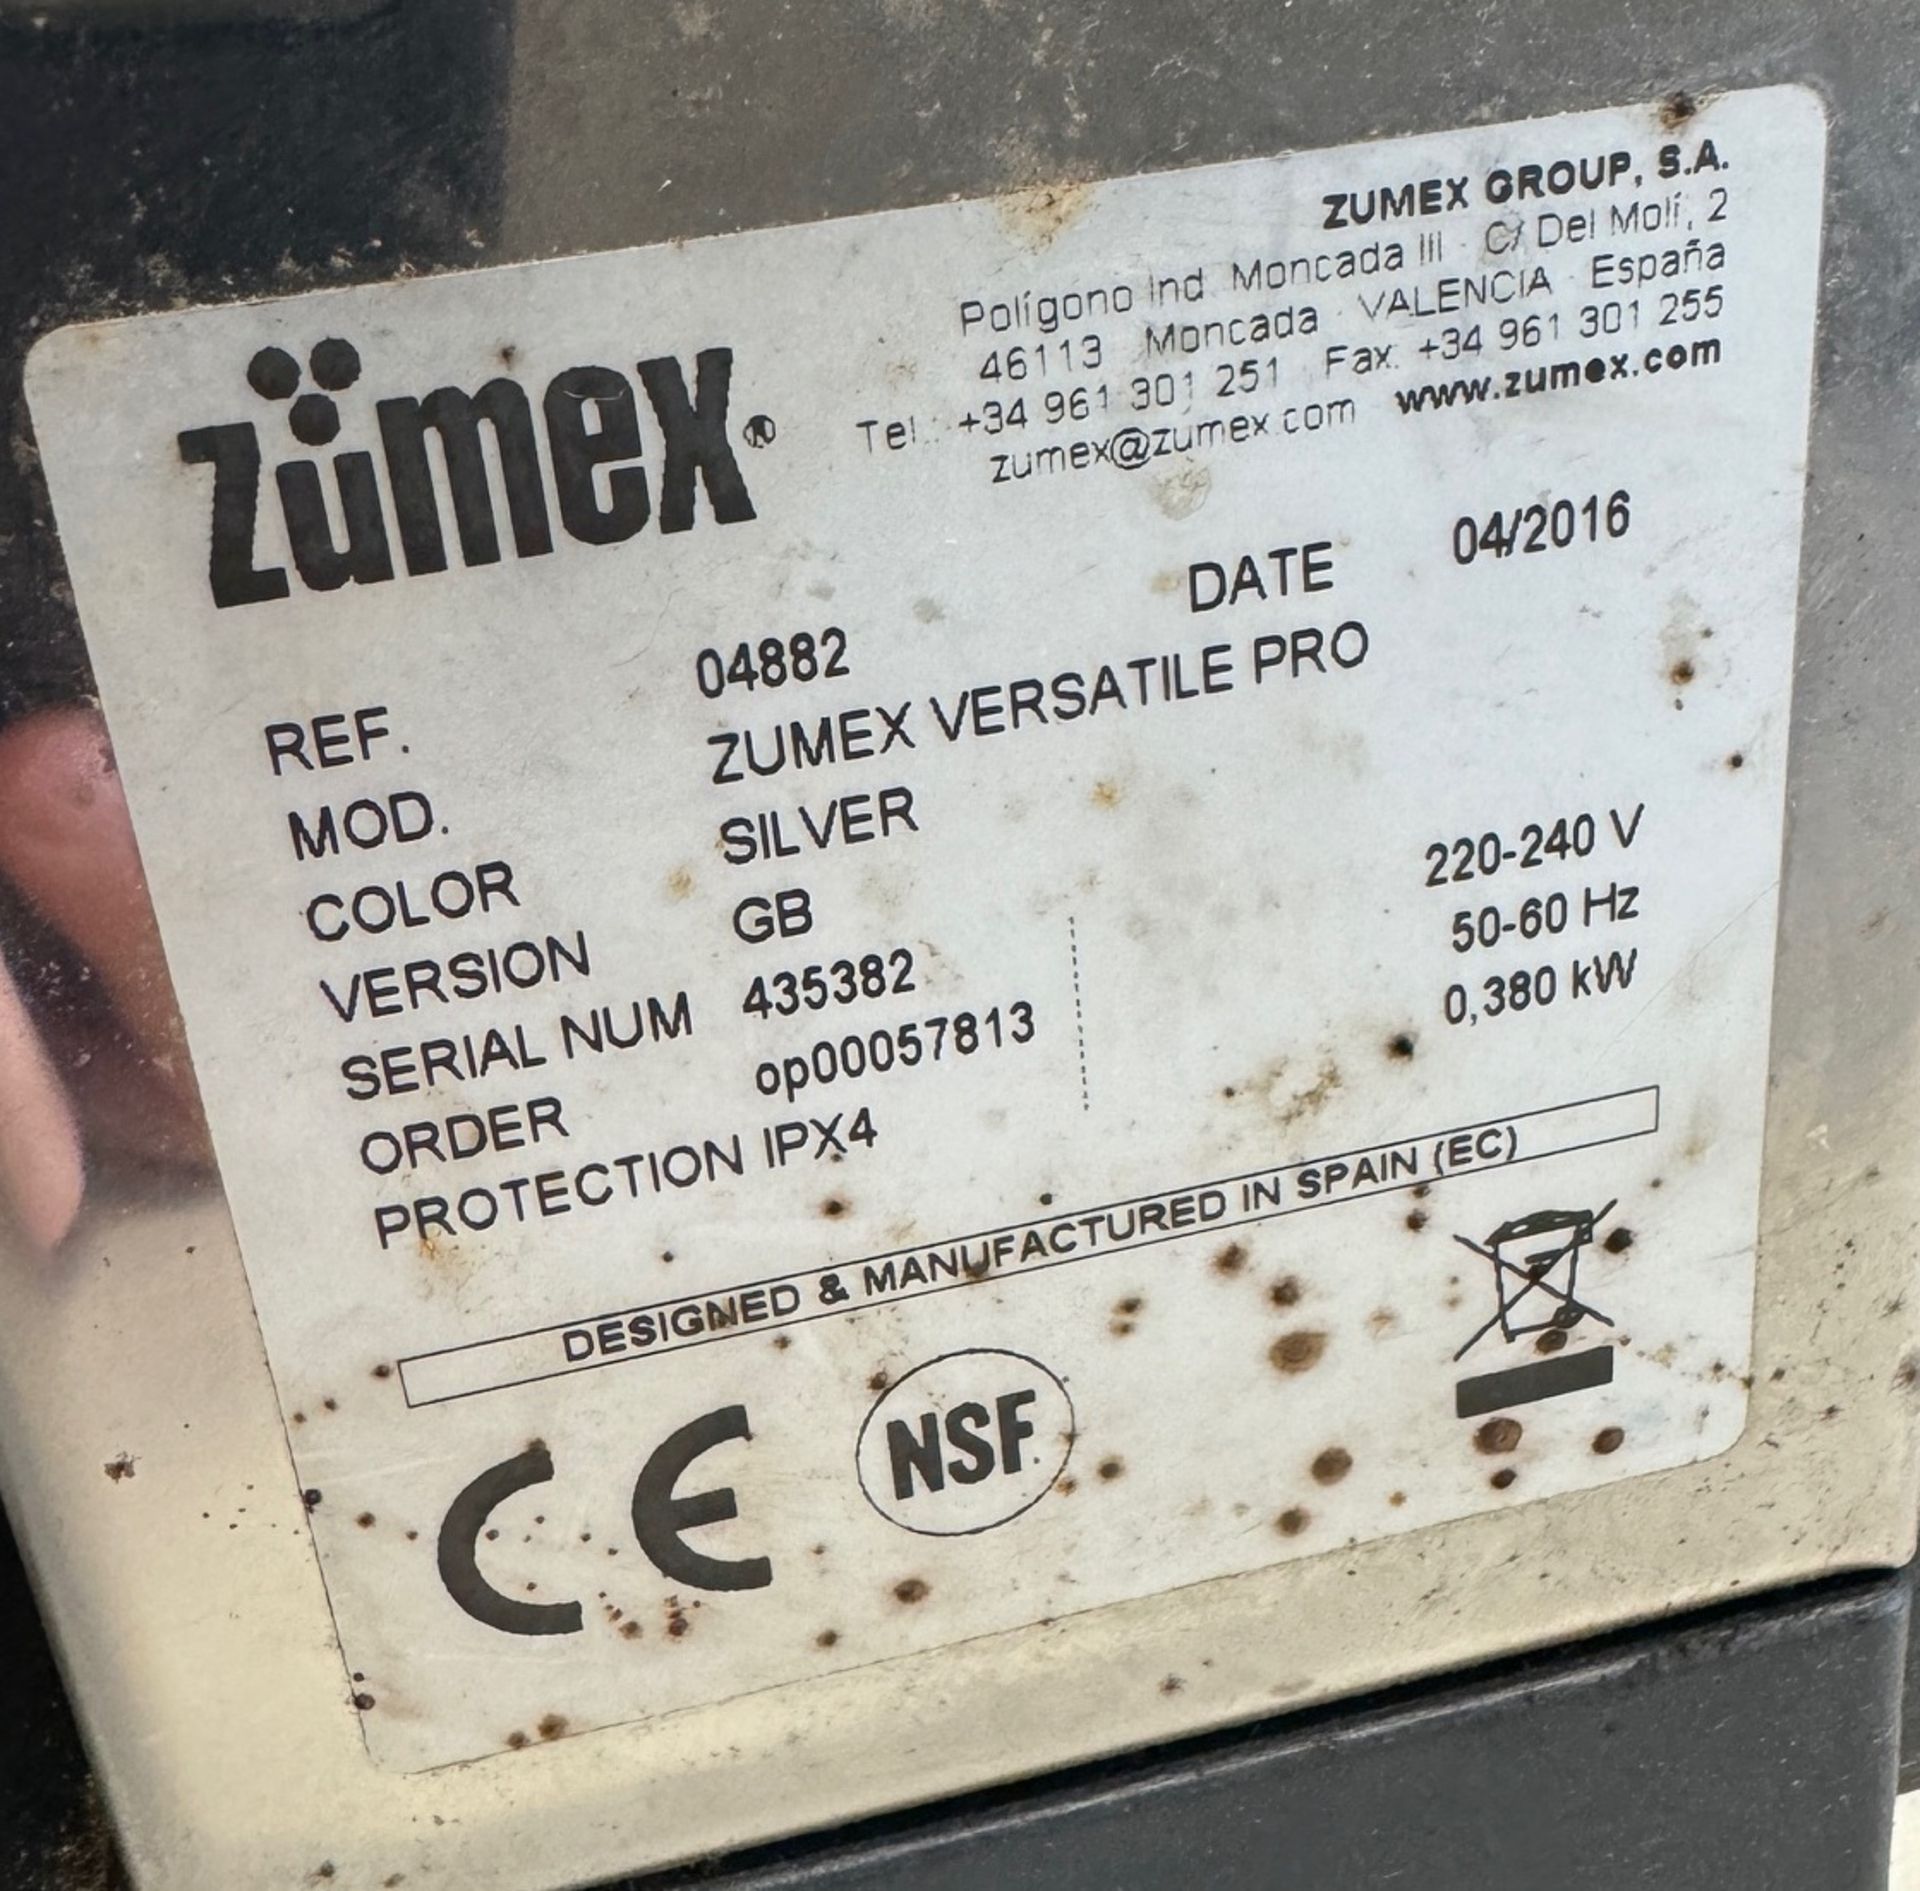 Zumex Versatile Pro Orange Juicer, Serial Number 435382 (2016) (Location Stockport) - Image 7 of 7